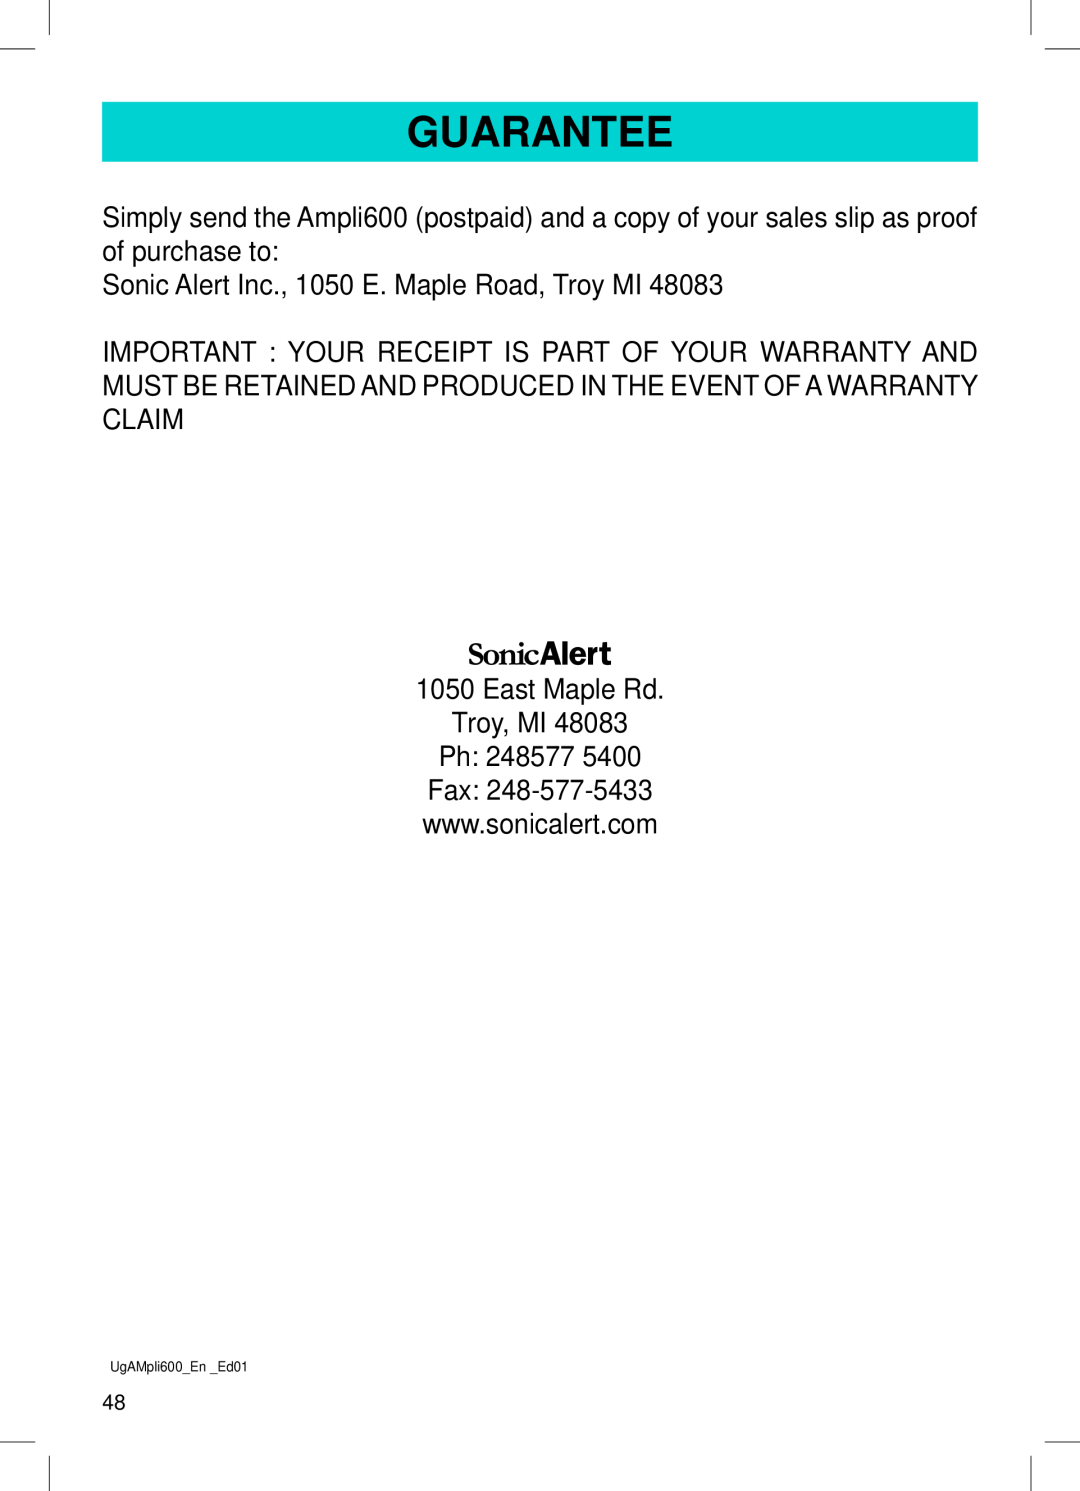 Geemarc AMPLI600 manual Guarantee, Sonic Alert Inc., 1050 E. Maple Road, Troy MI, East Maple Rd Troy, MI Ph 248577 Fax 